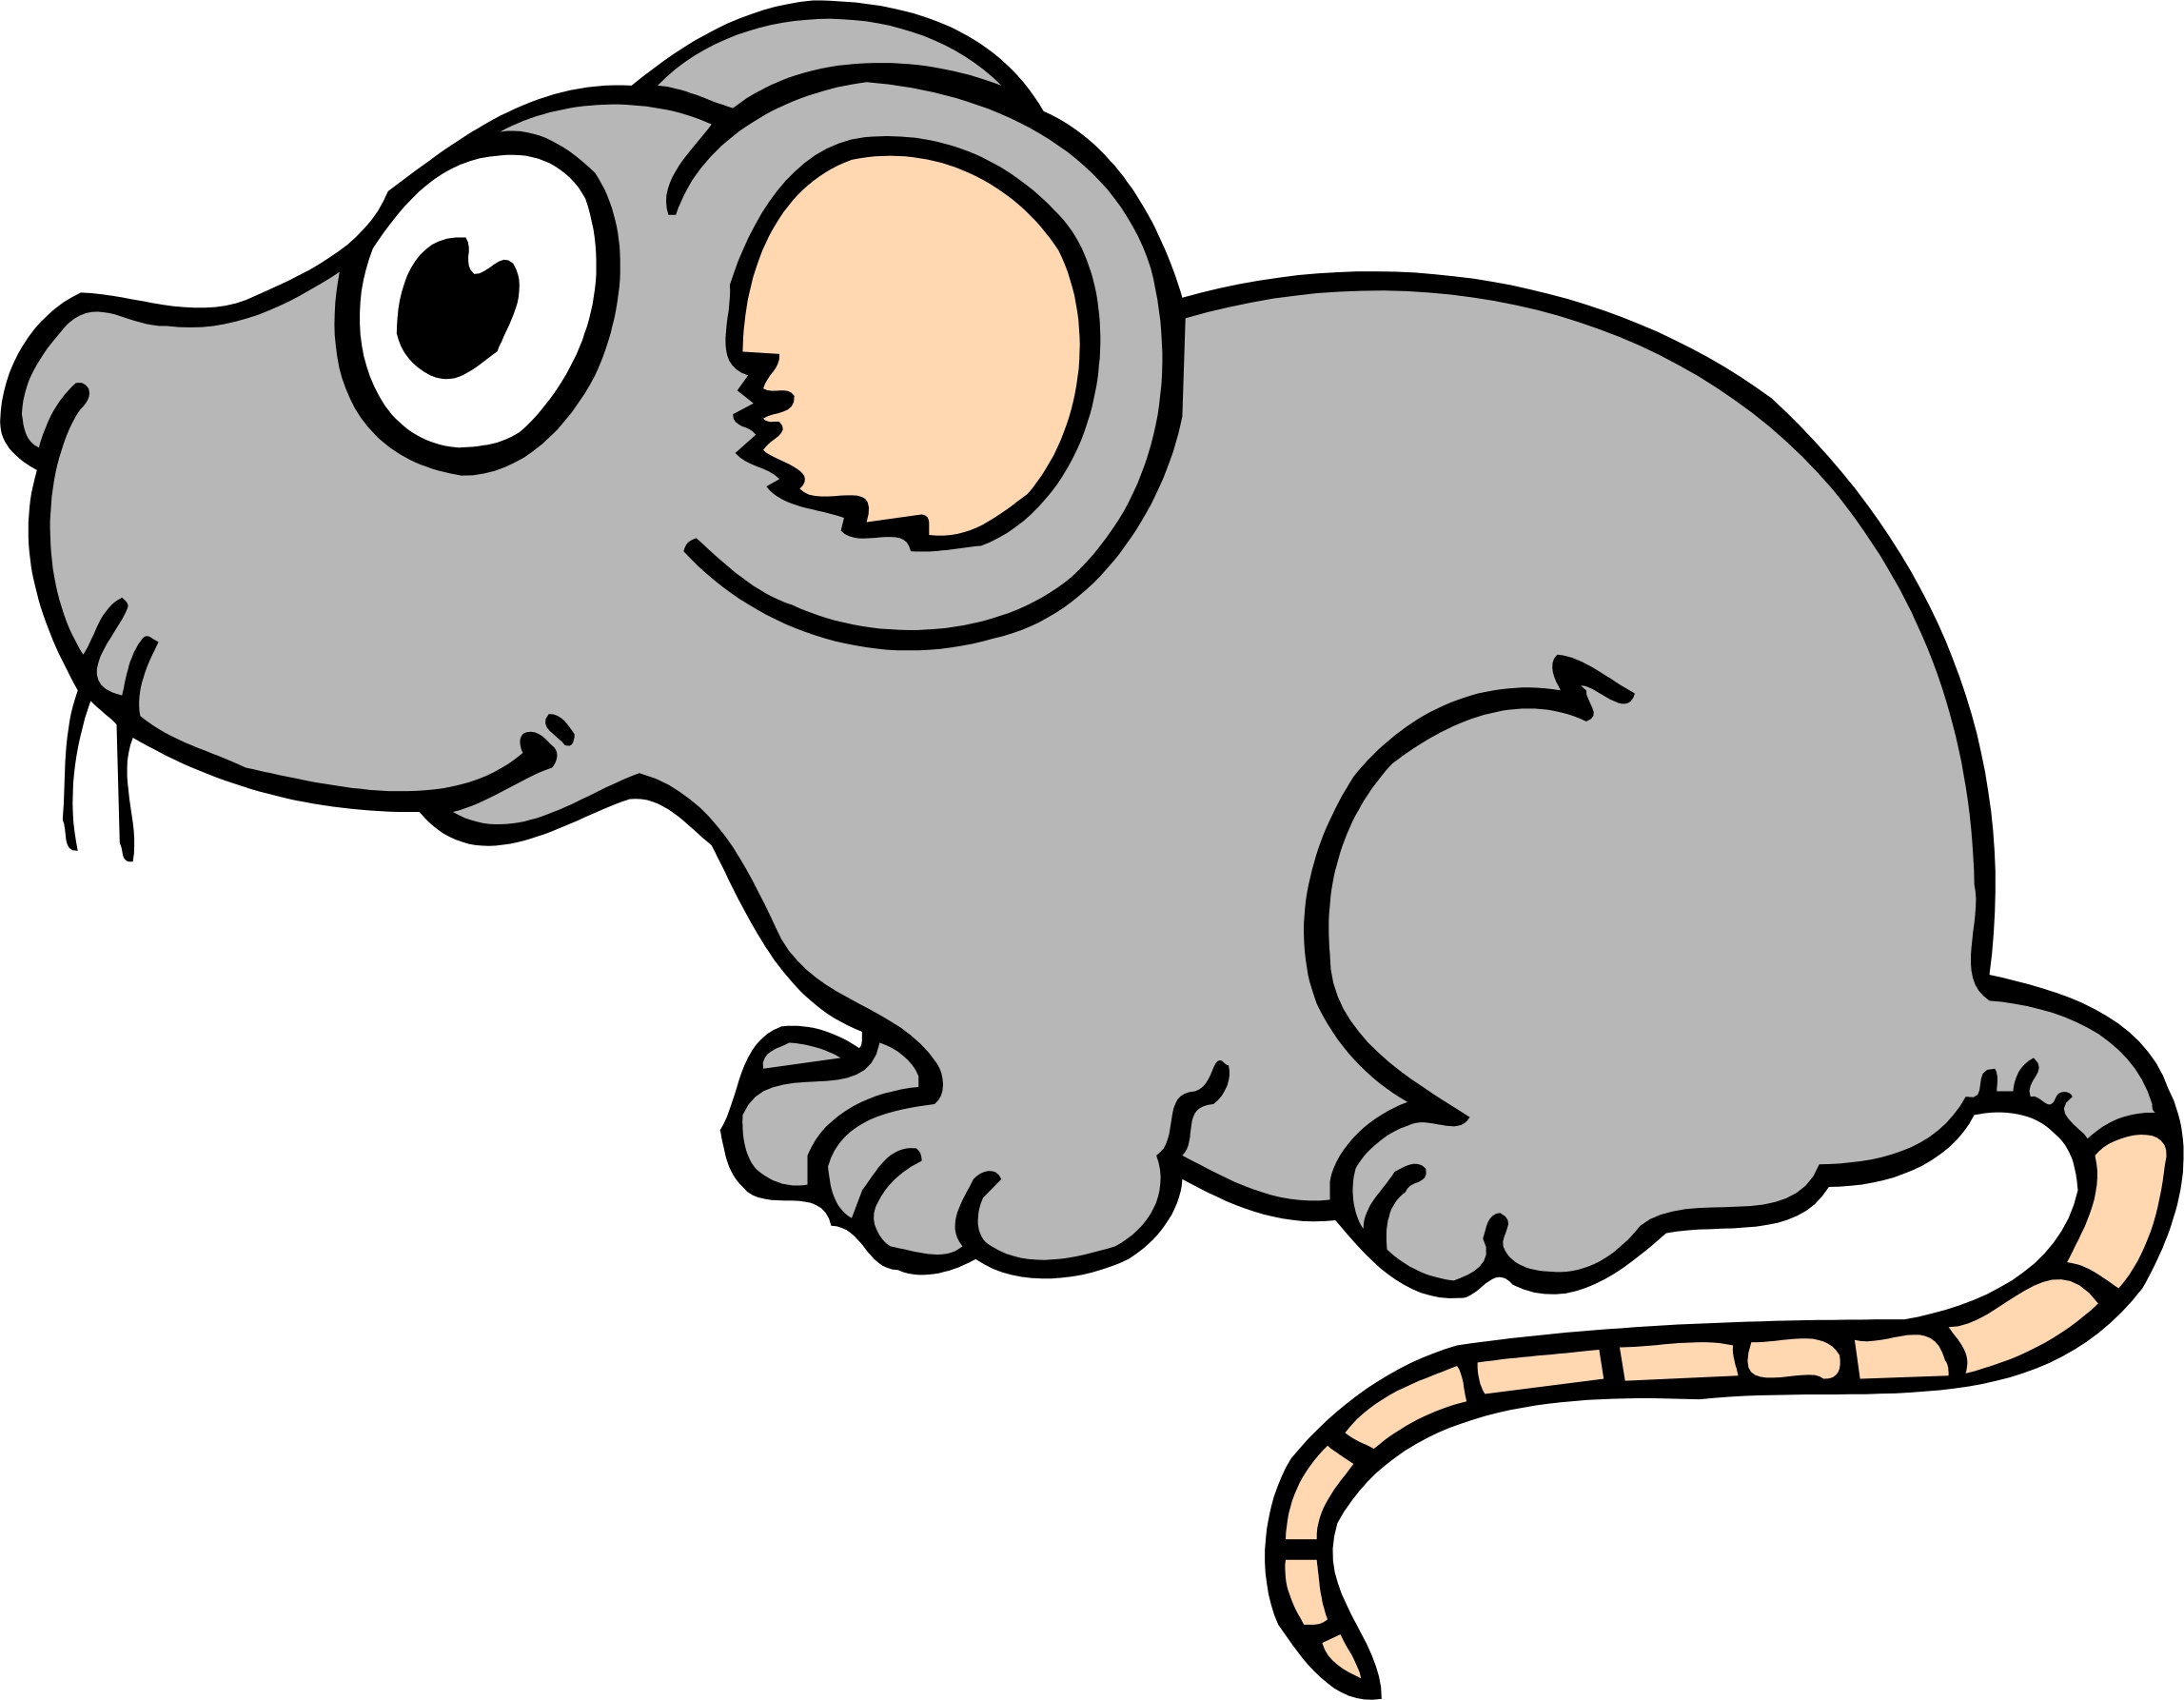 clipart mouse cartoon - photo #47